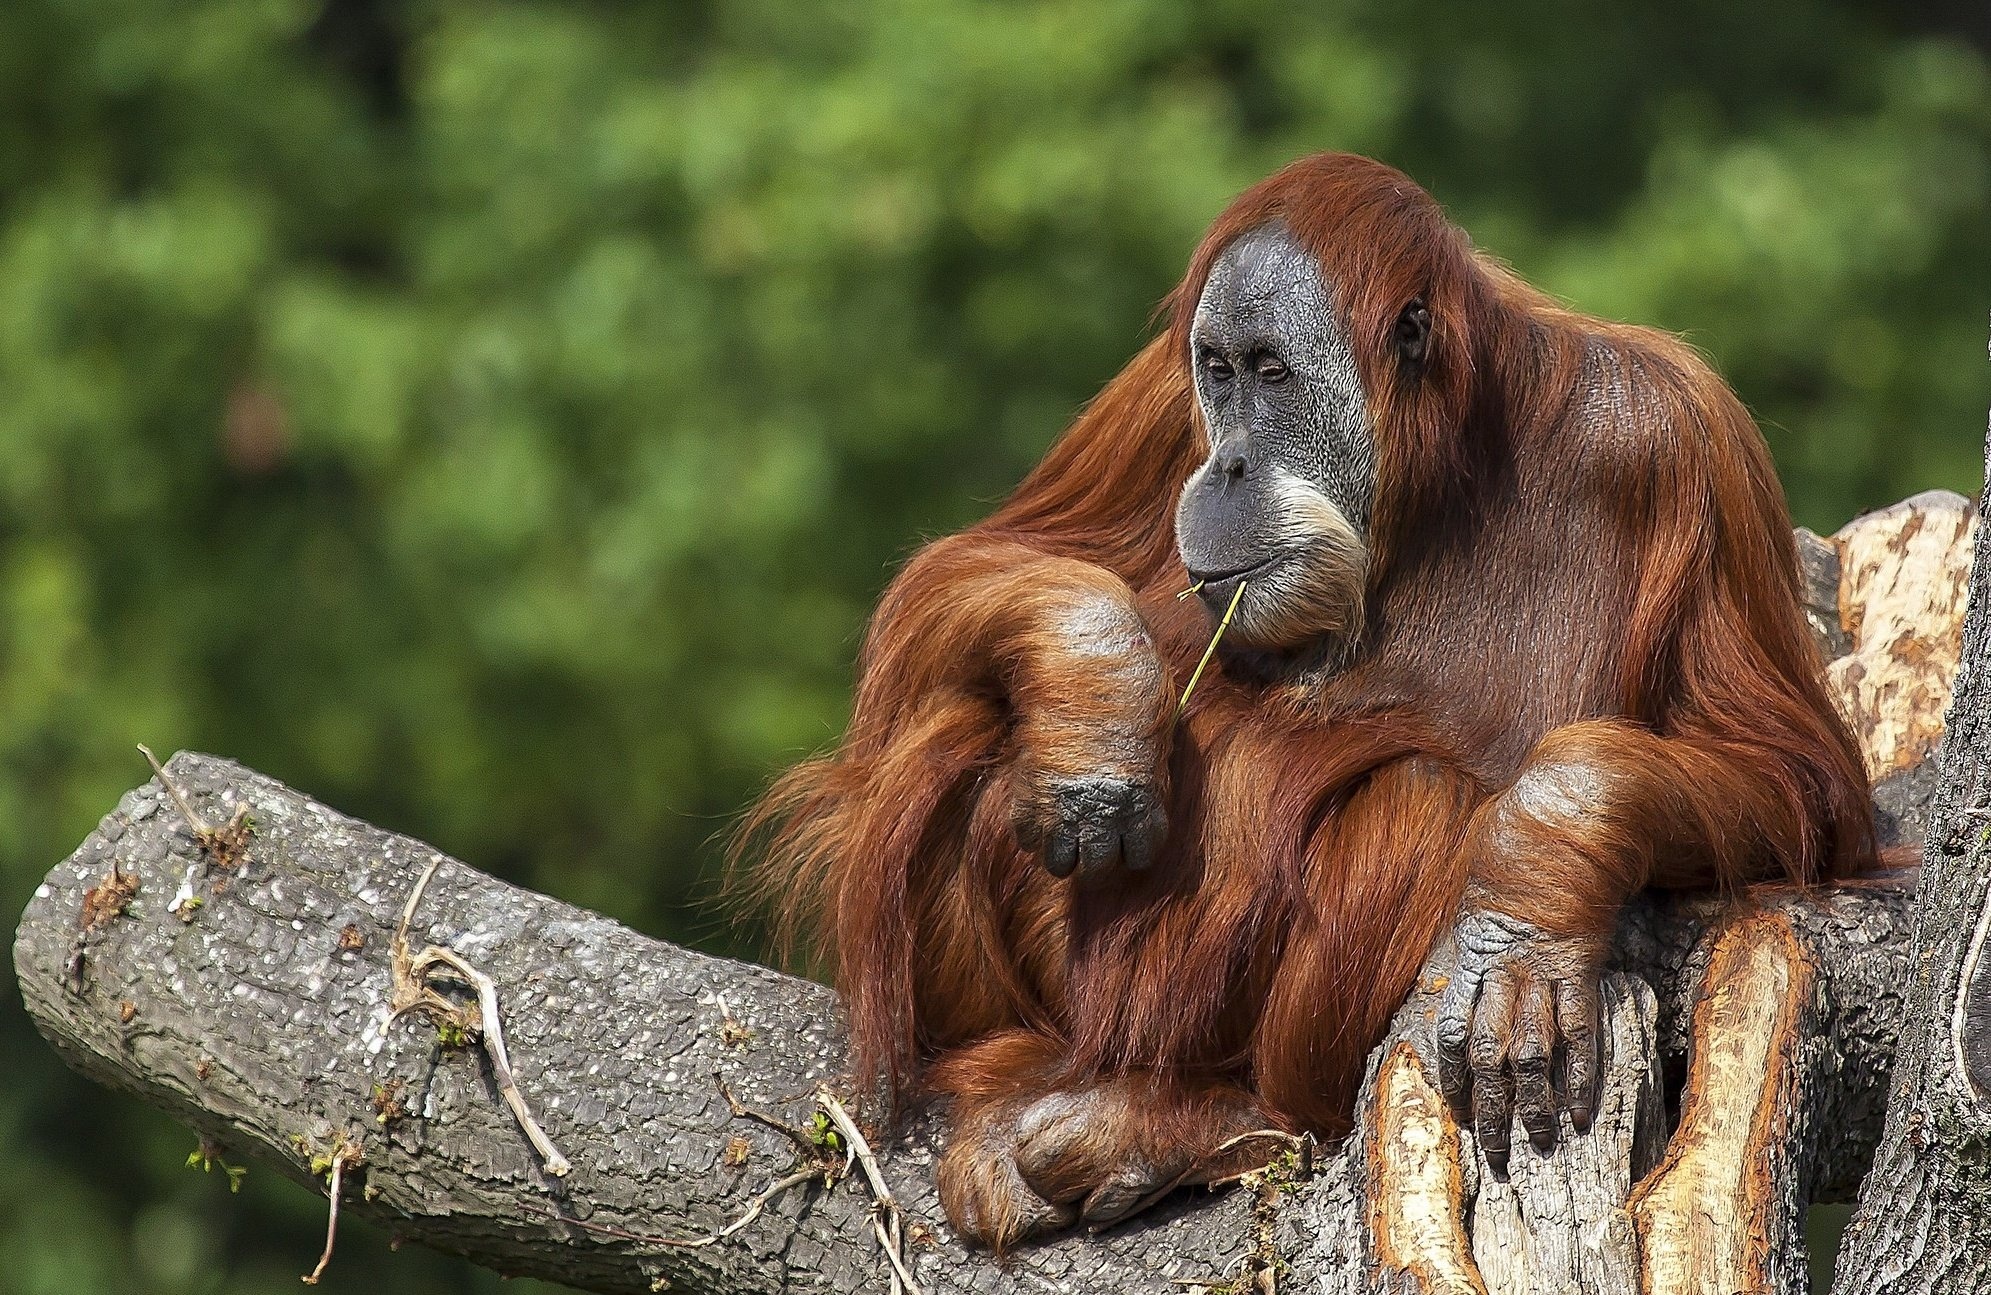 Orangutan animal, Primate wallpapers, HD desktop, Mobile backgrounds, 2000x1300 HD Desktop